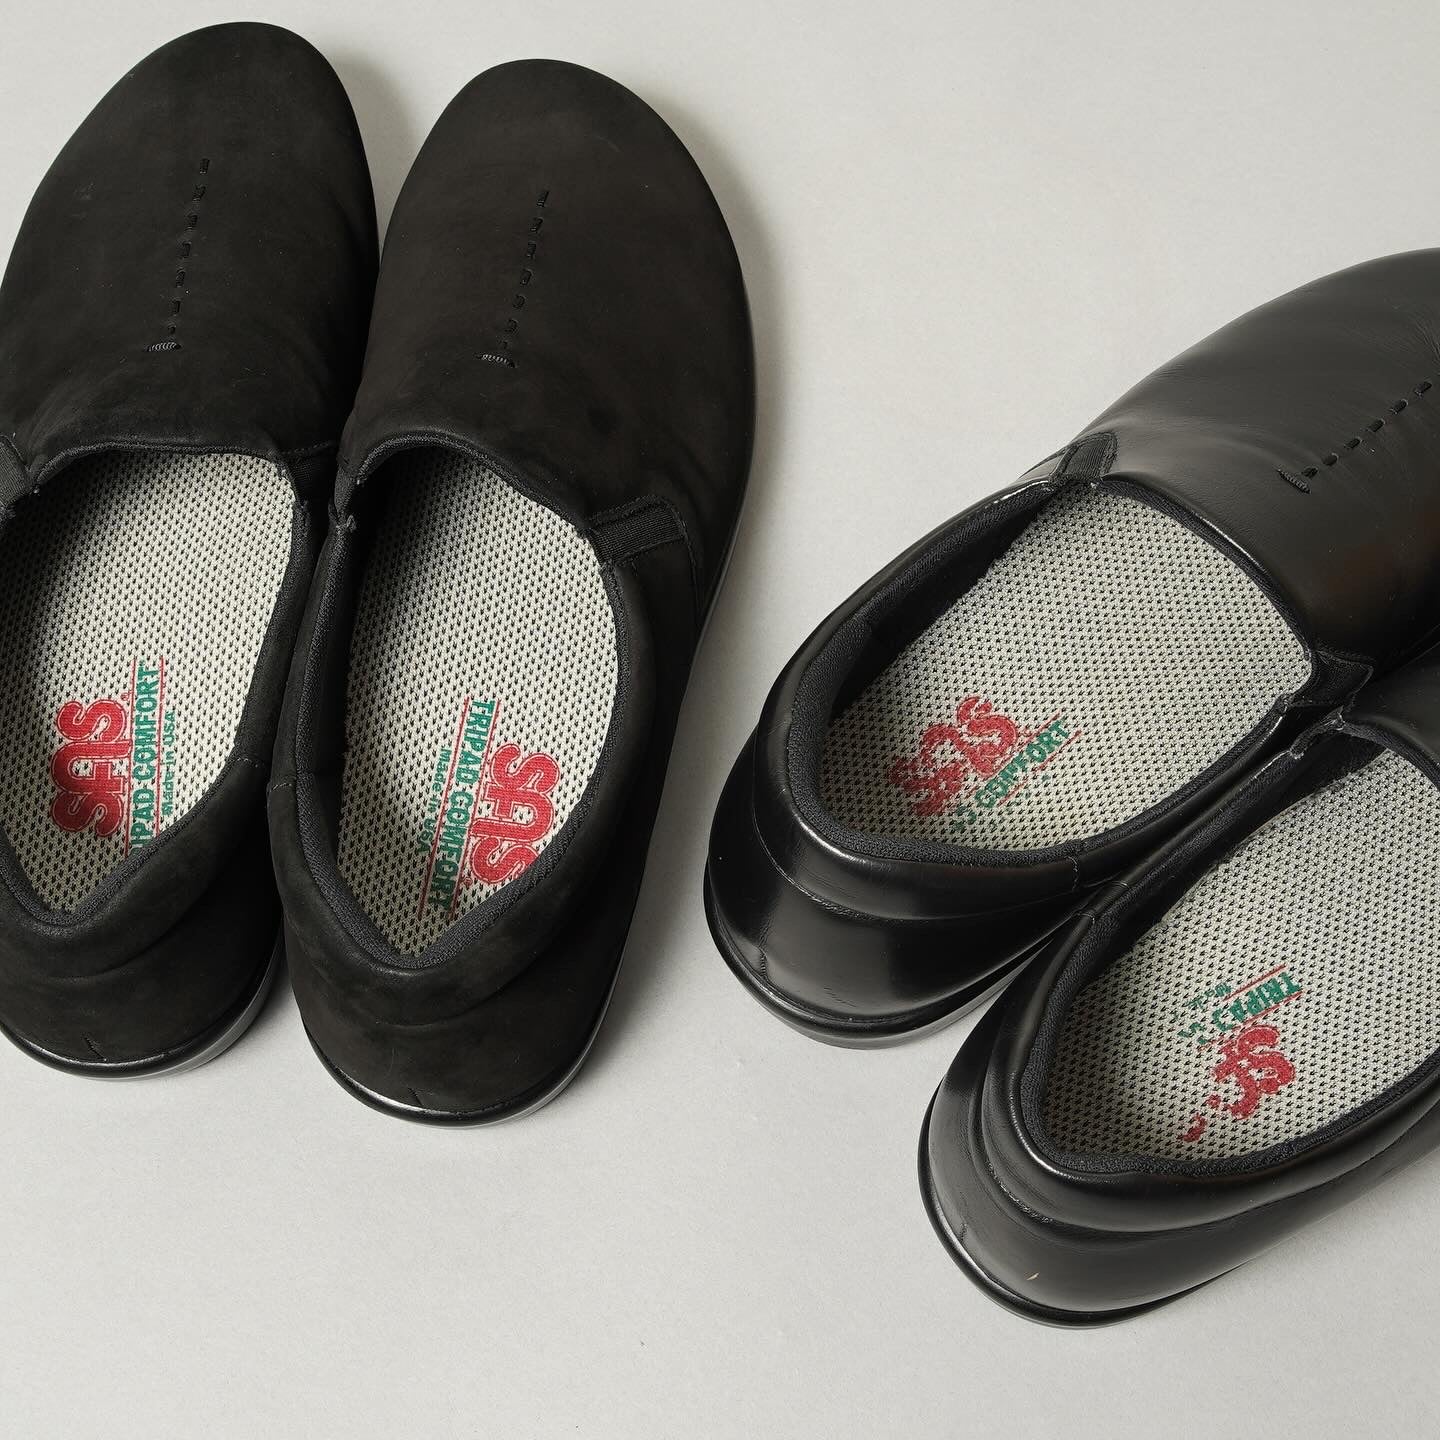 SAS Leather Comfort Shoes